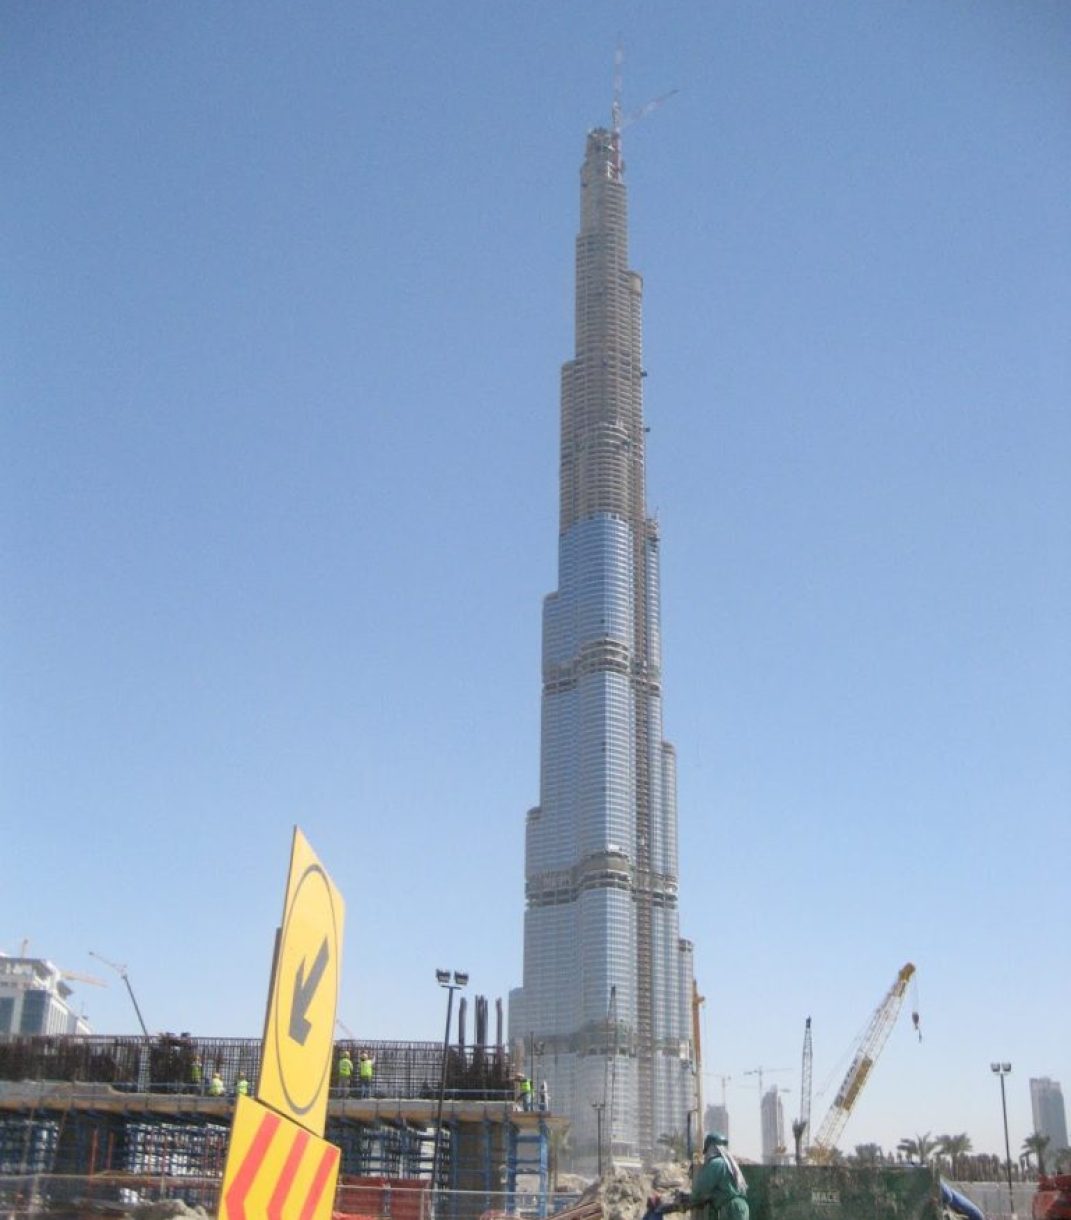 The Burj Khalifa up close during construction